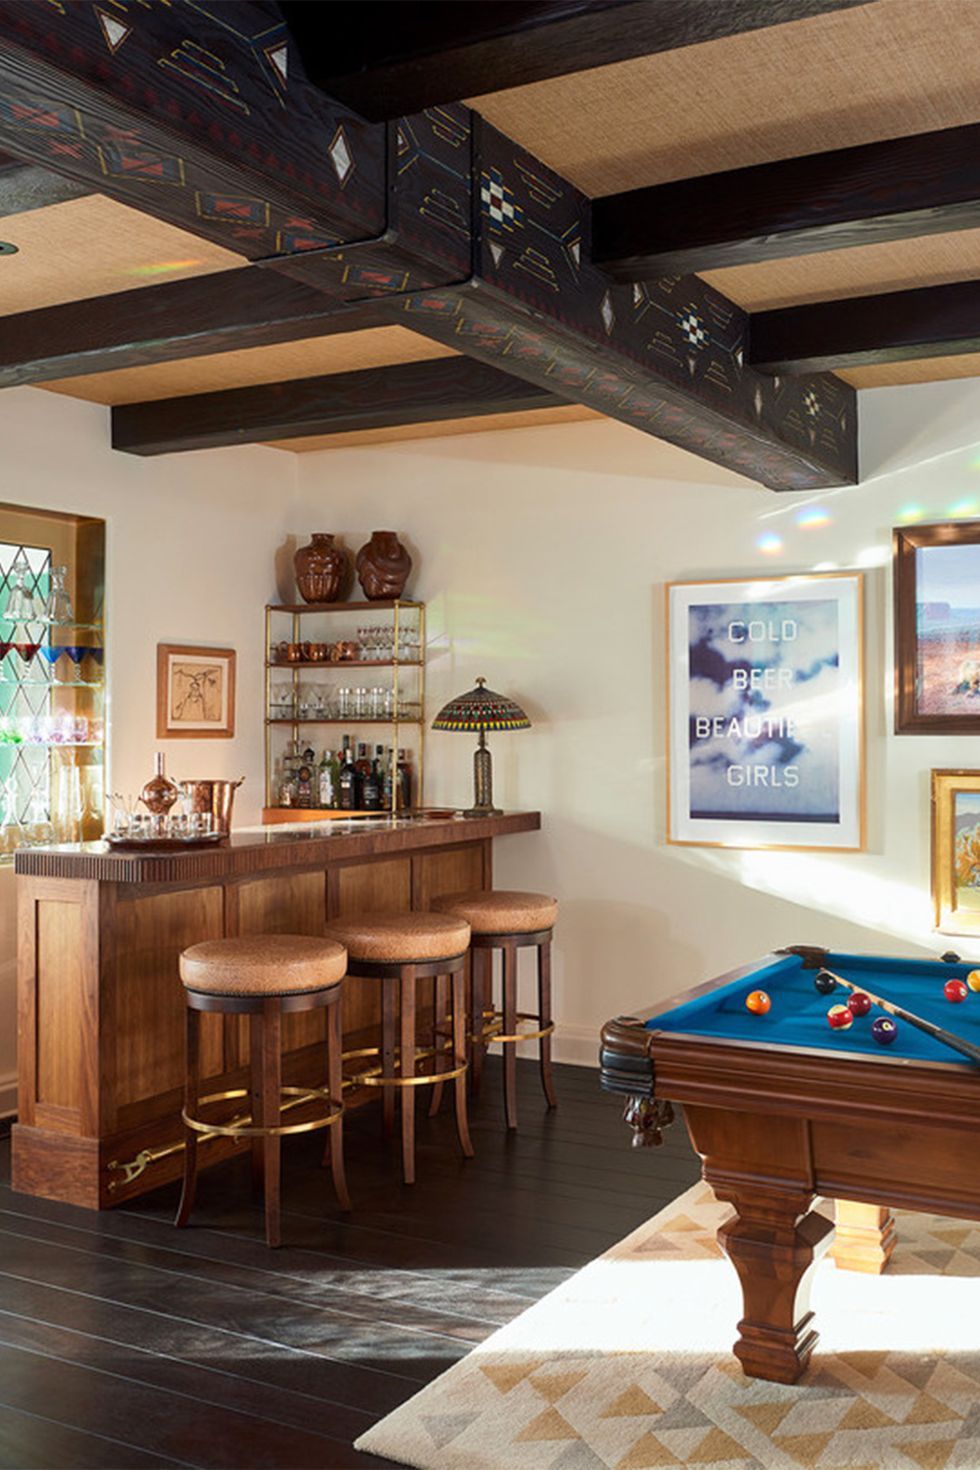 Featured image of post Pub Style Room Design / Pub sheds pub interior interior design home pub pub design british pub victorian kitchen english decor london pubs.